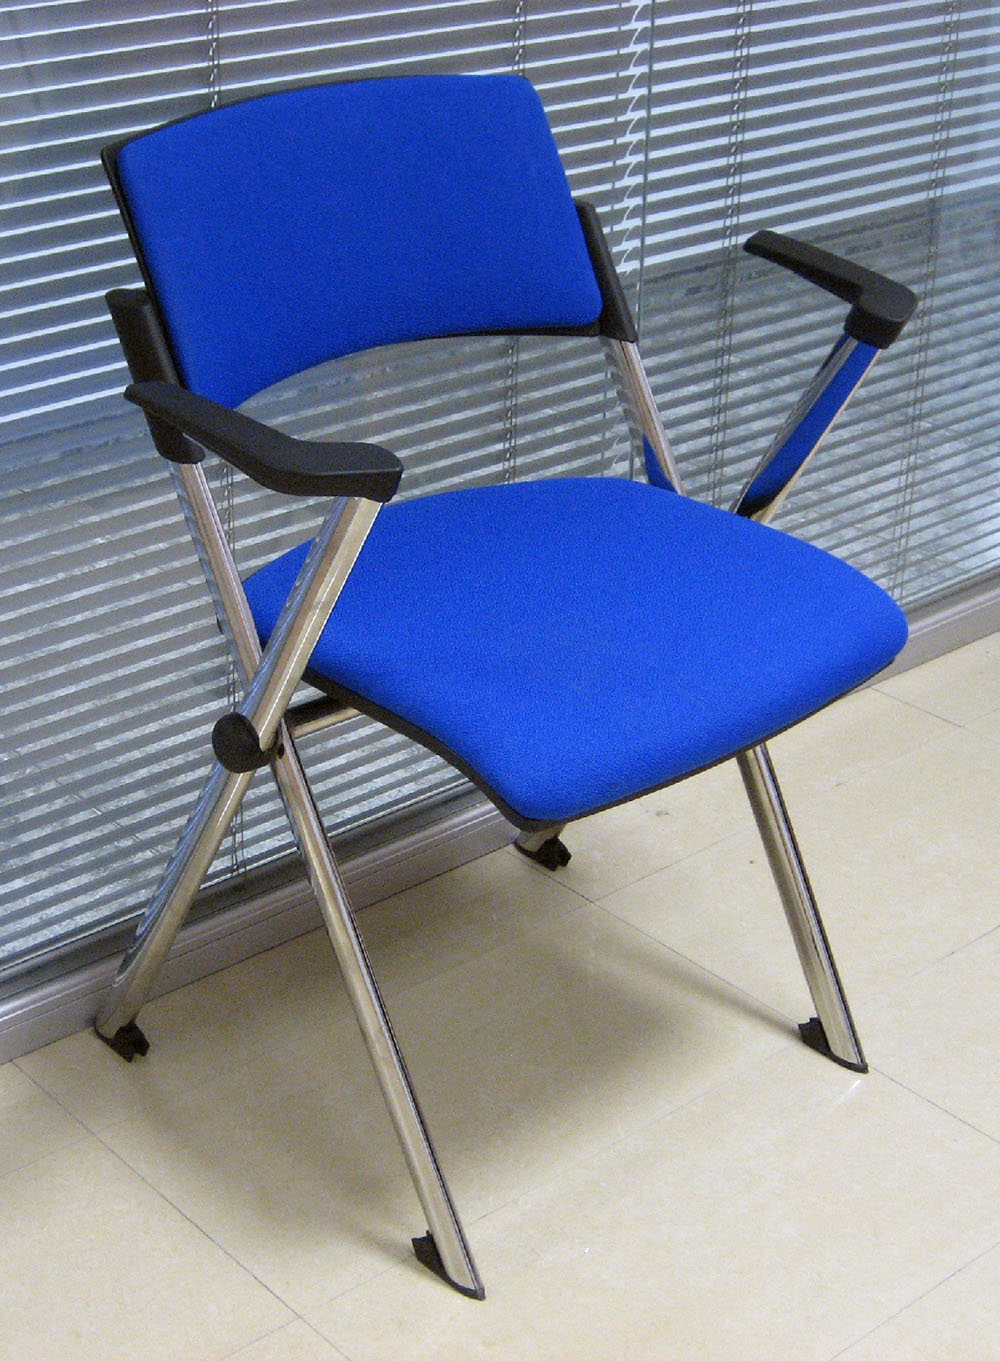 Folding chair upholstered